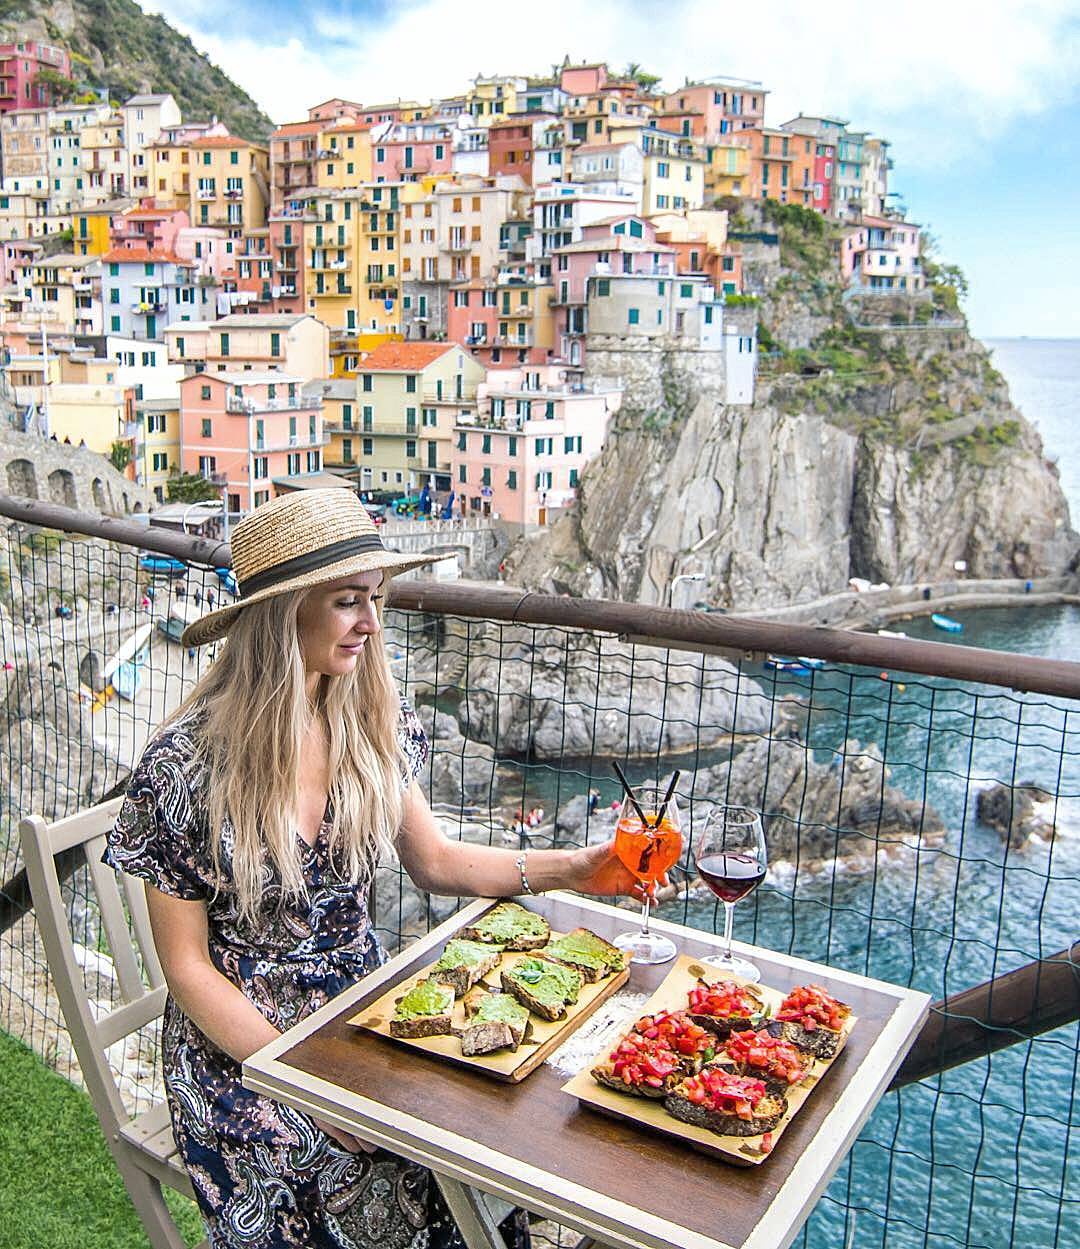 Swedish Nomad on X: "Manarola, Cinque Terre #italy #restaurant #view  https://t.co/awKBhpqtE4" / X